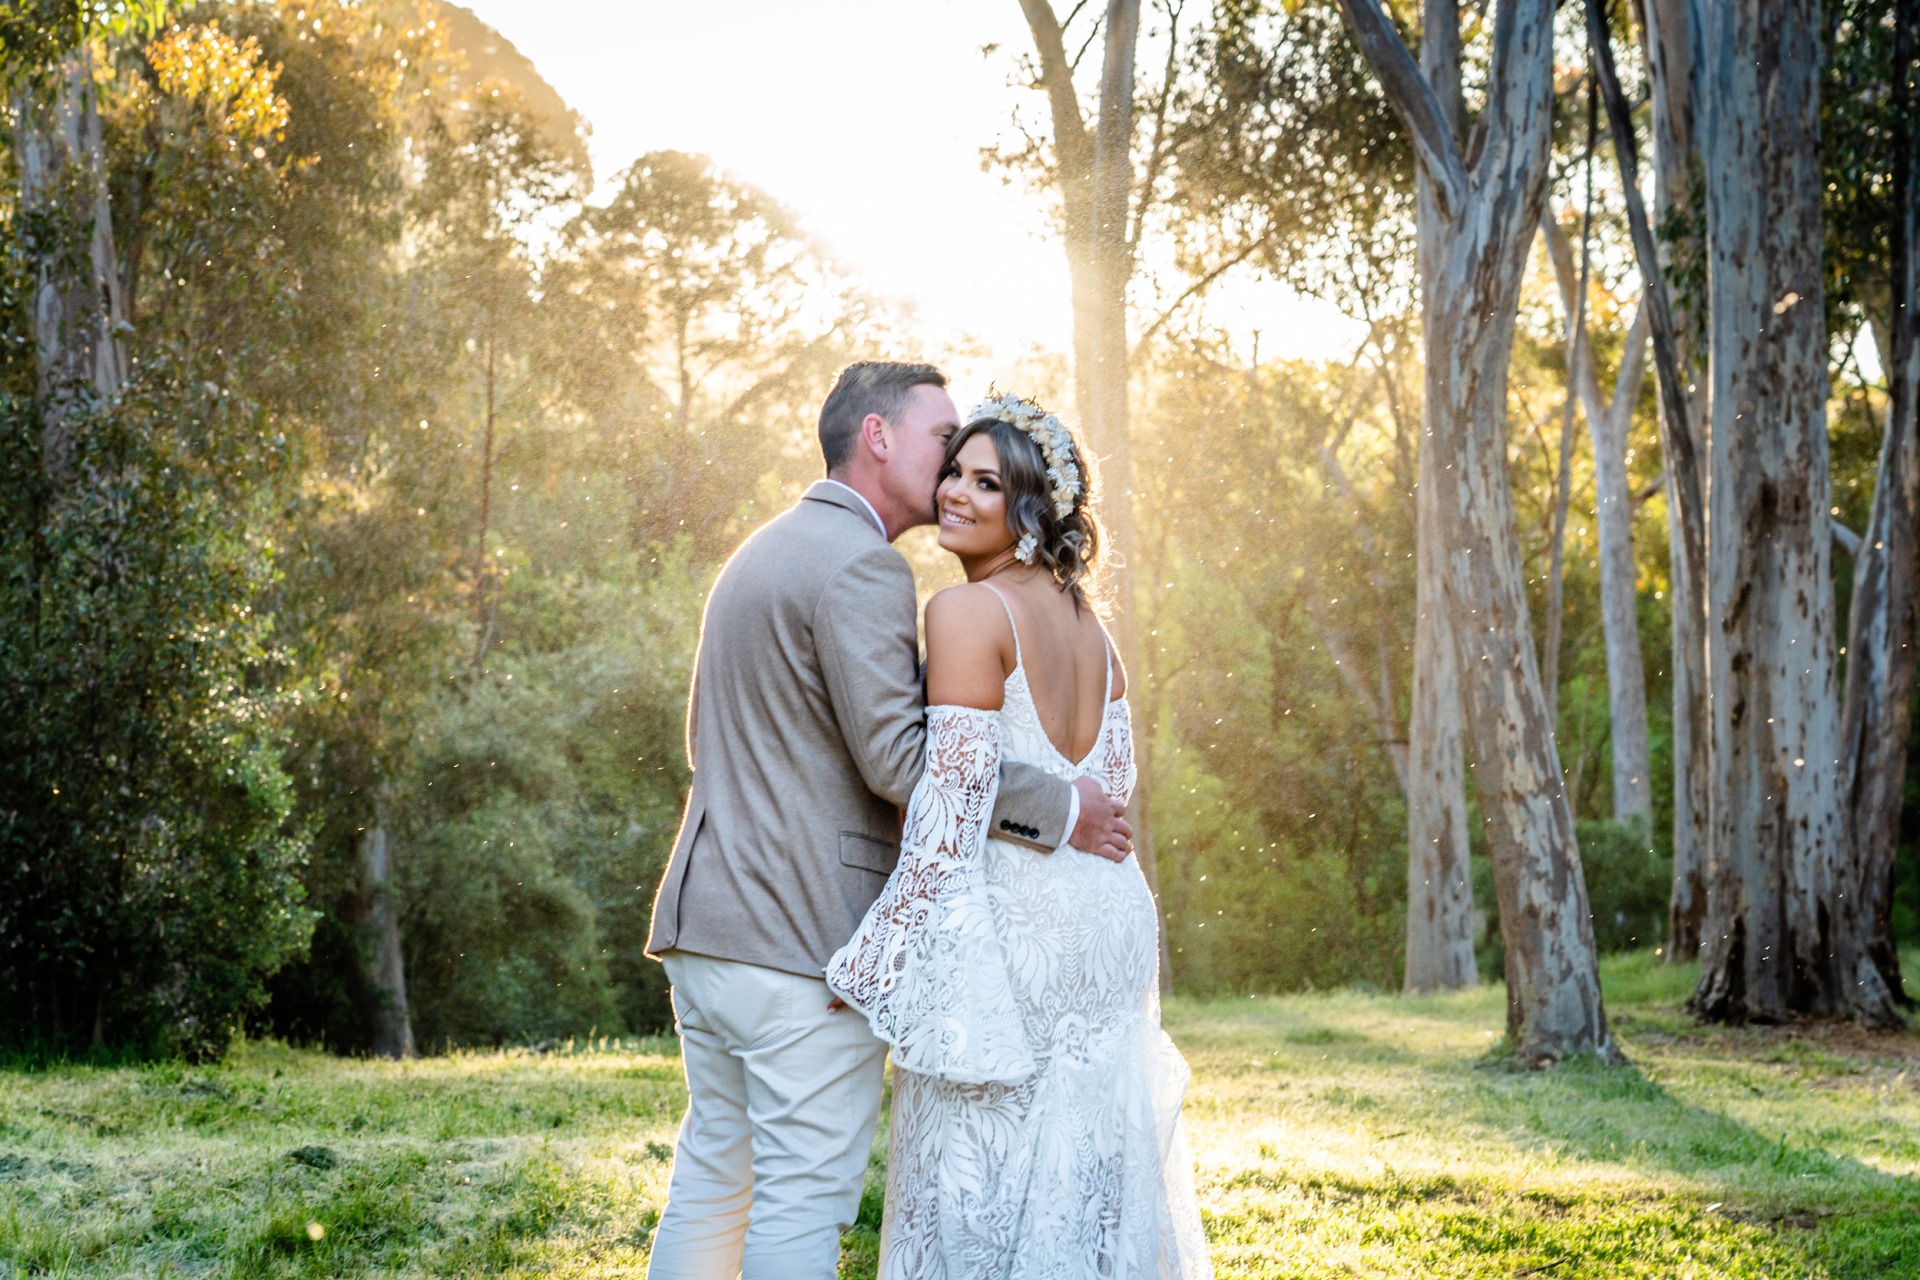 Wedding Photography & videography Adelaide